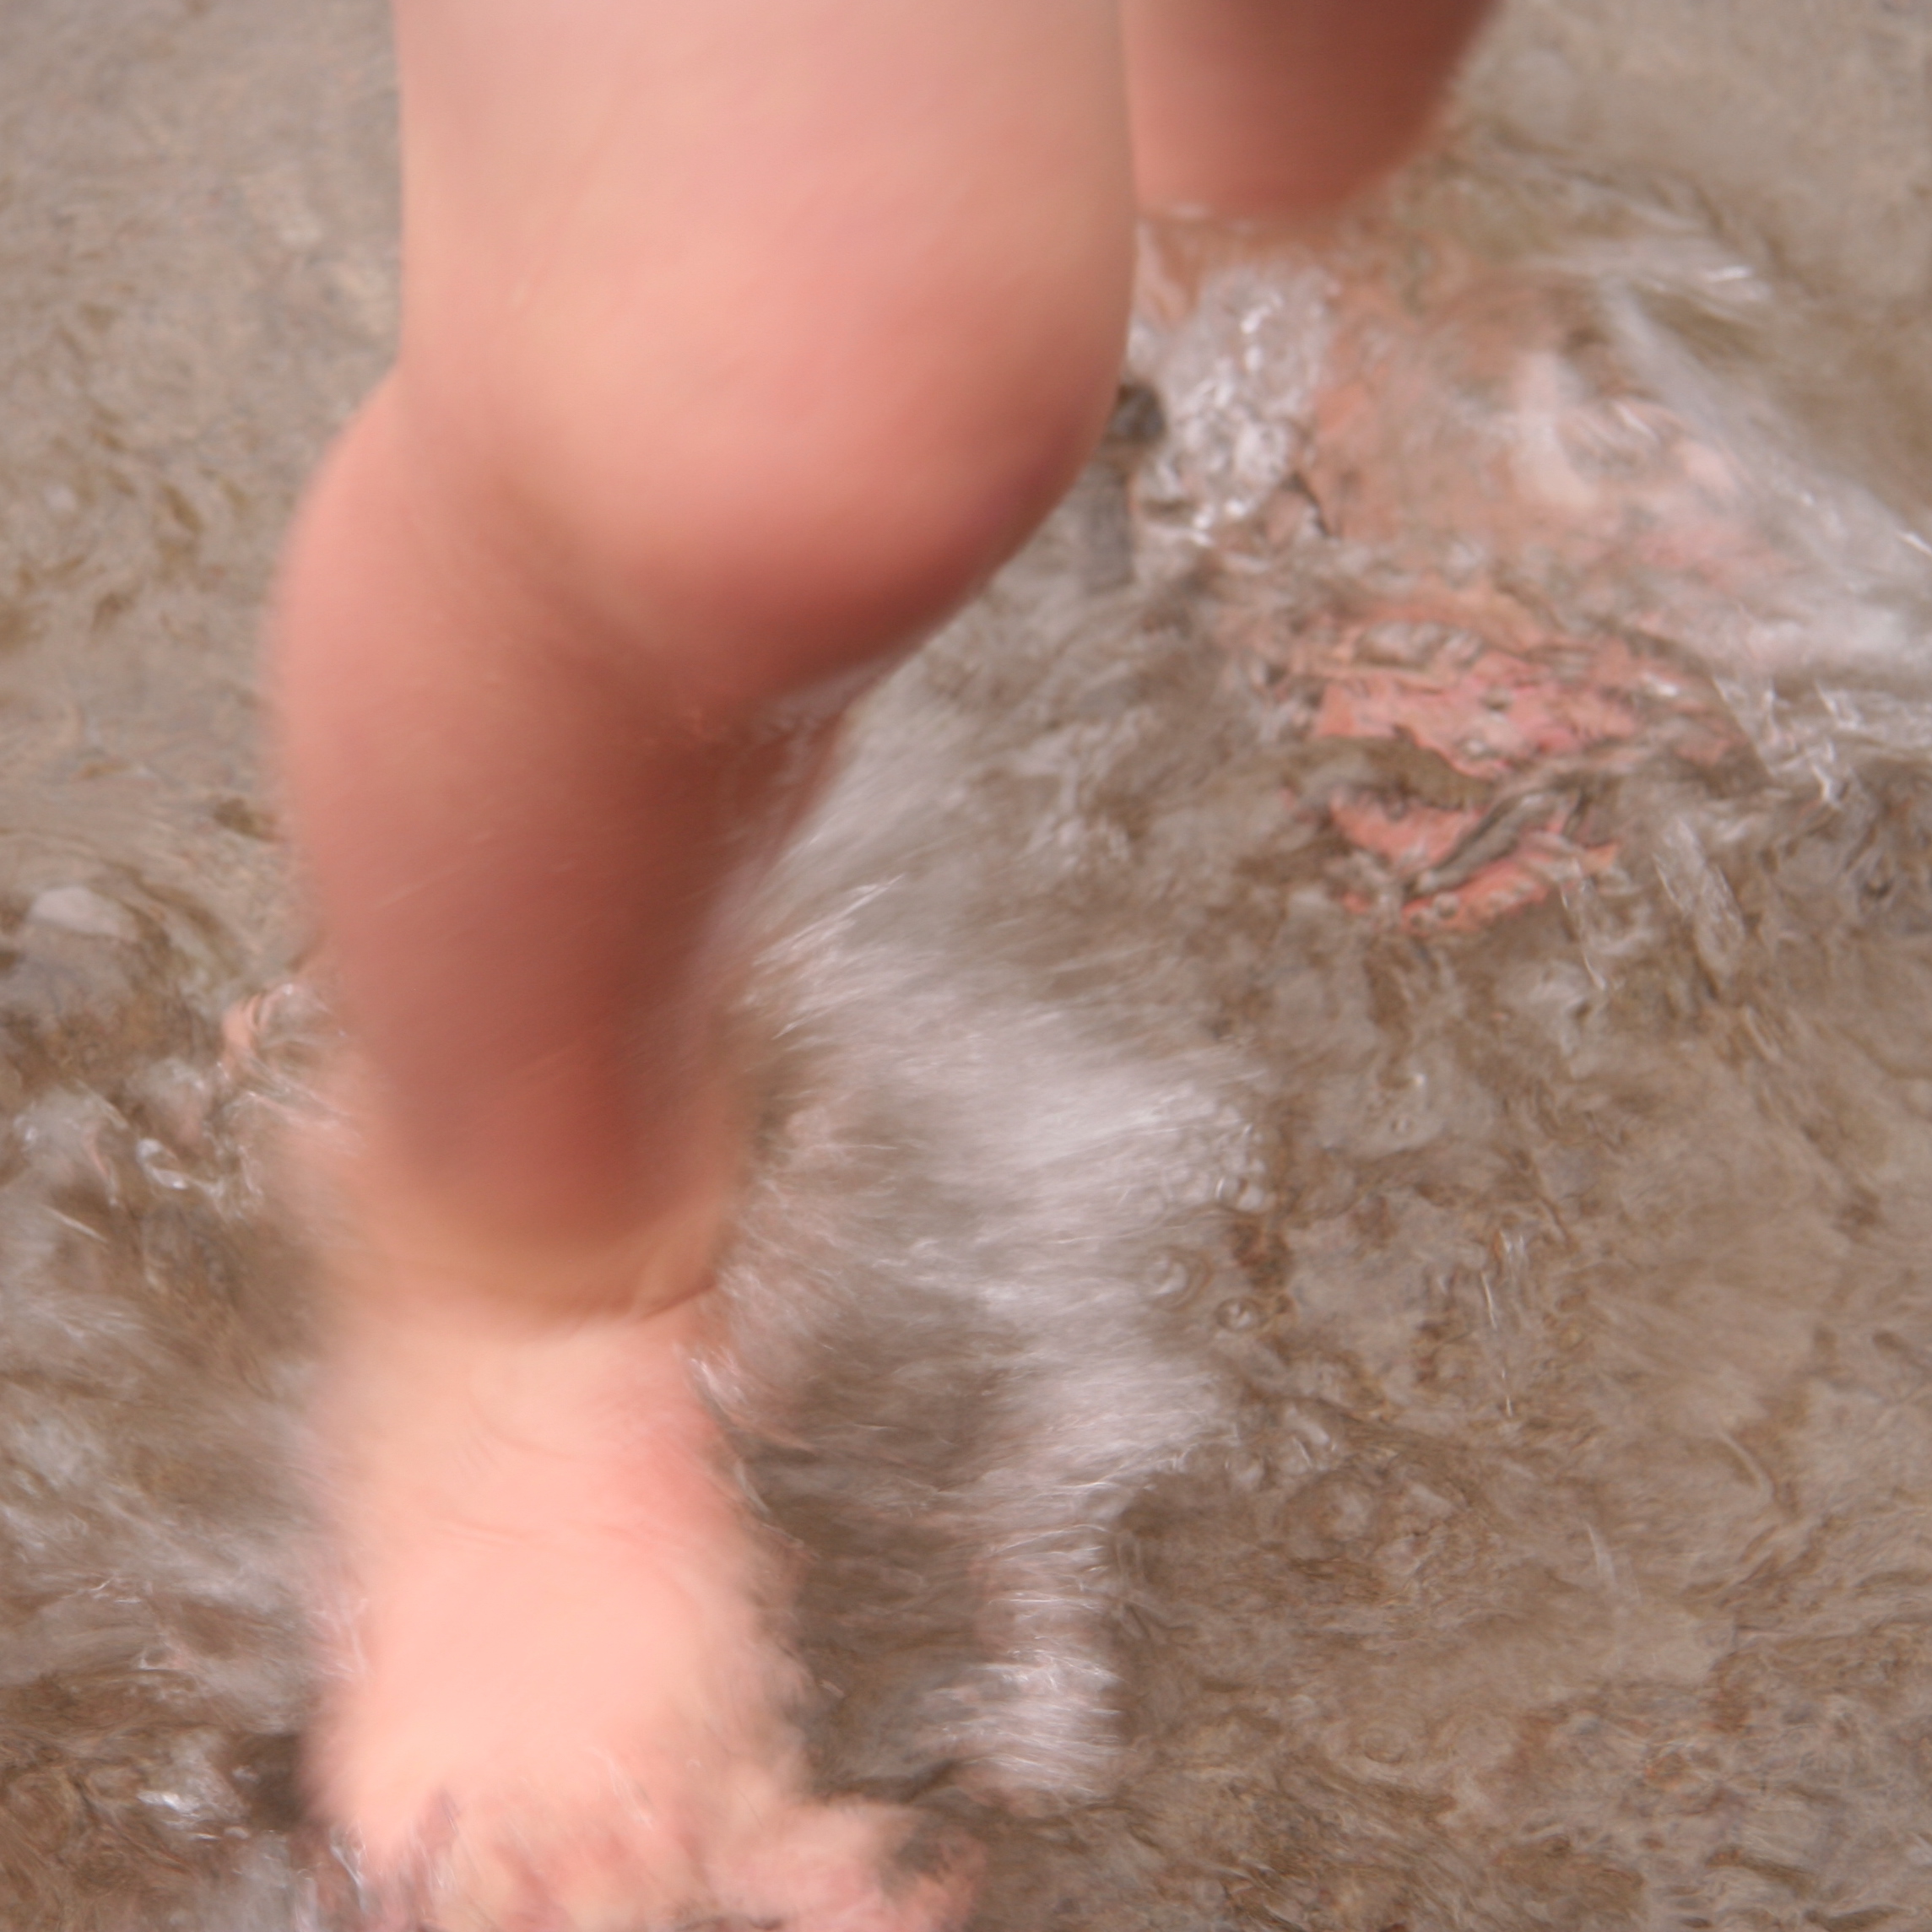 child's legs and bare feet splashing in water